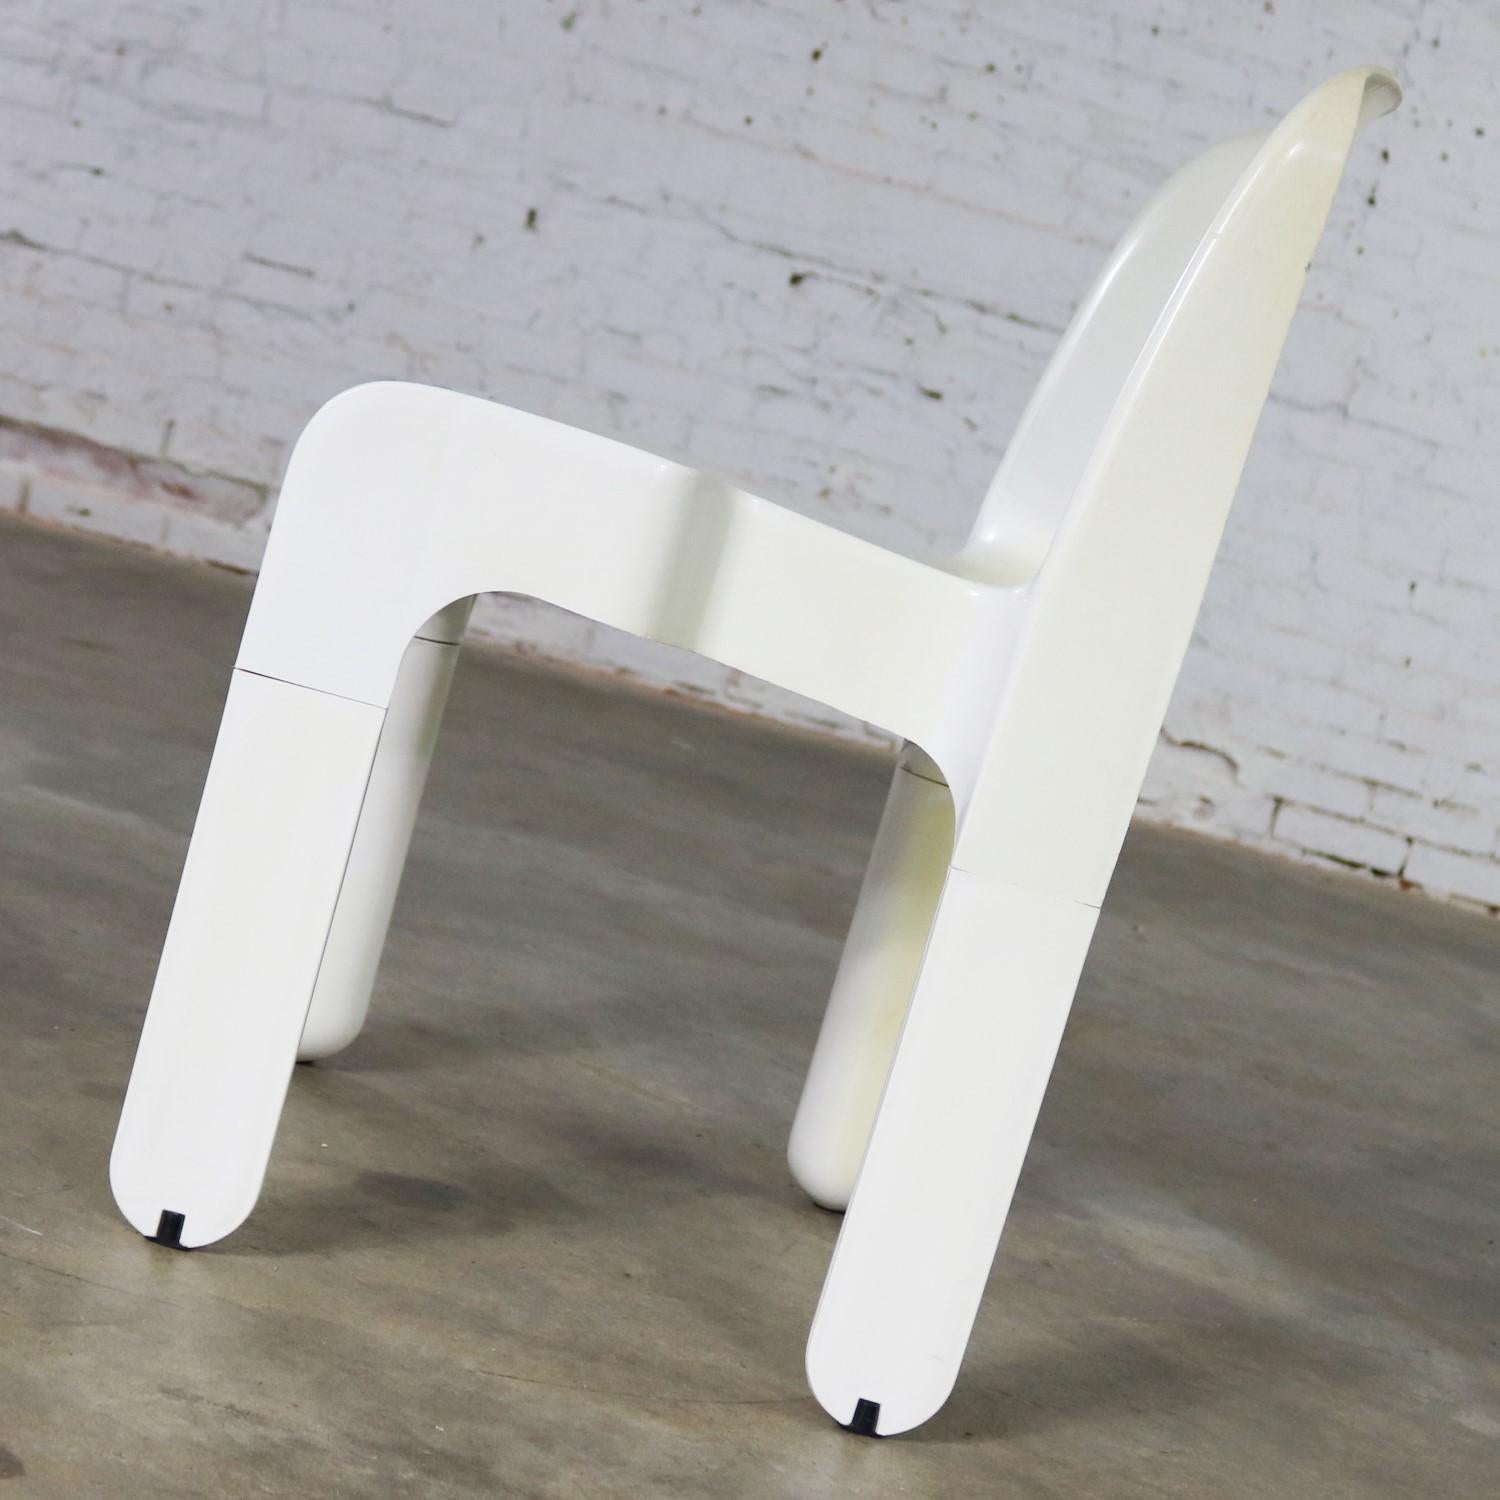 American Sedia Universale 4867 Plastic Chair by Joe Columbo for Kartell in White